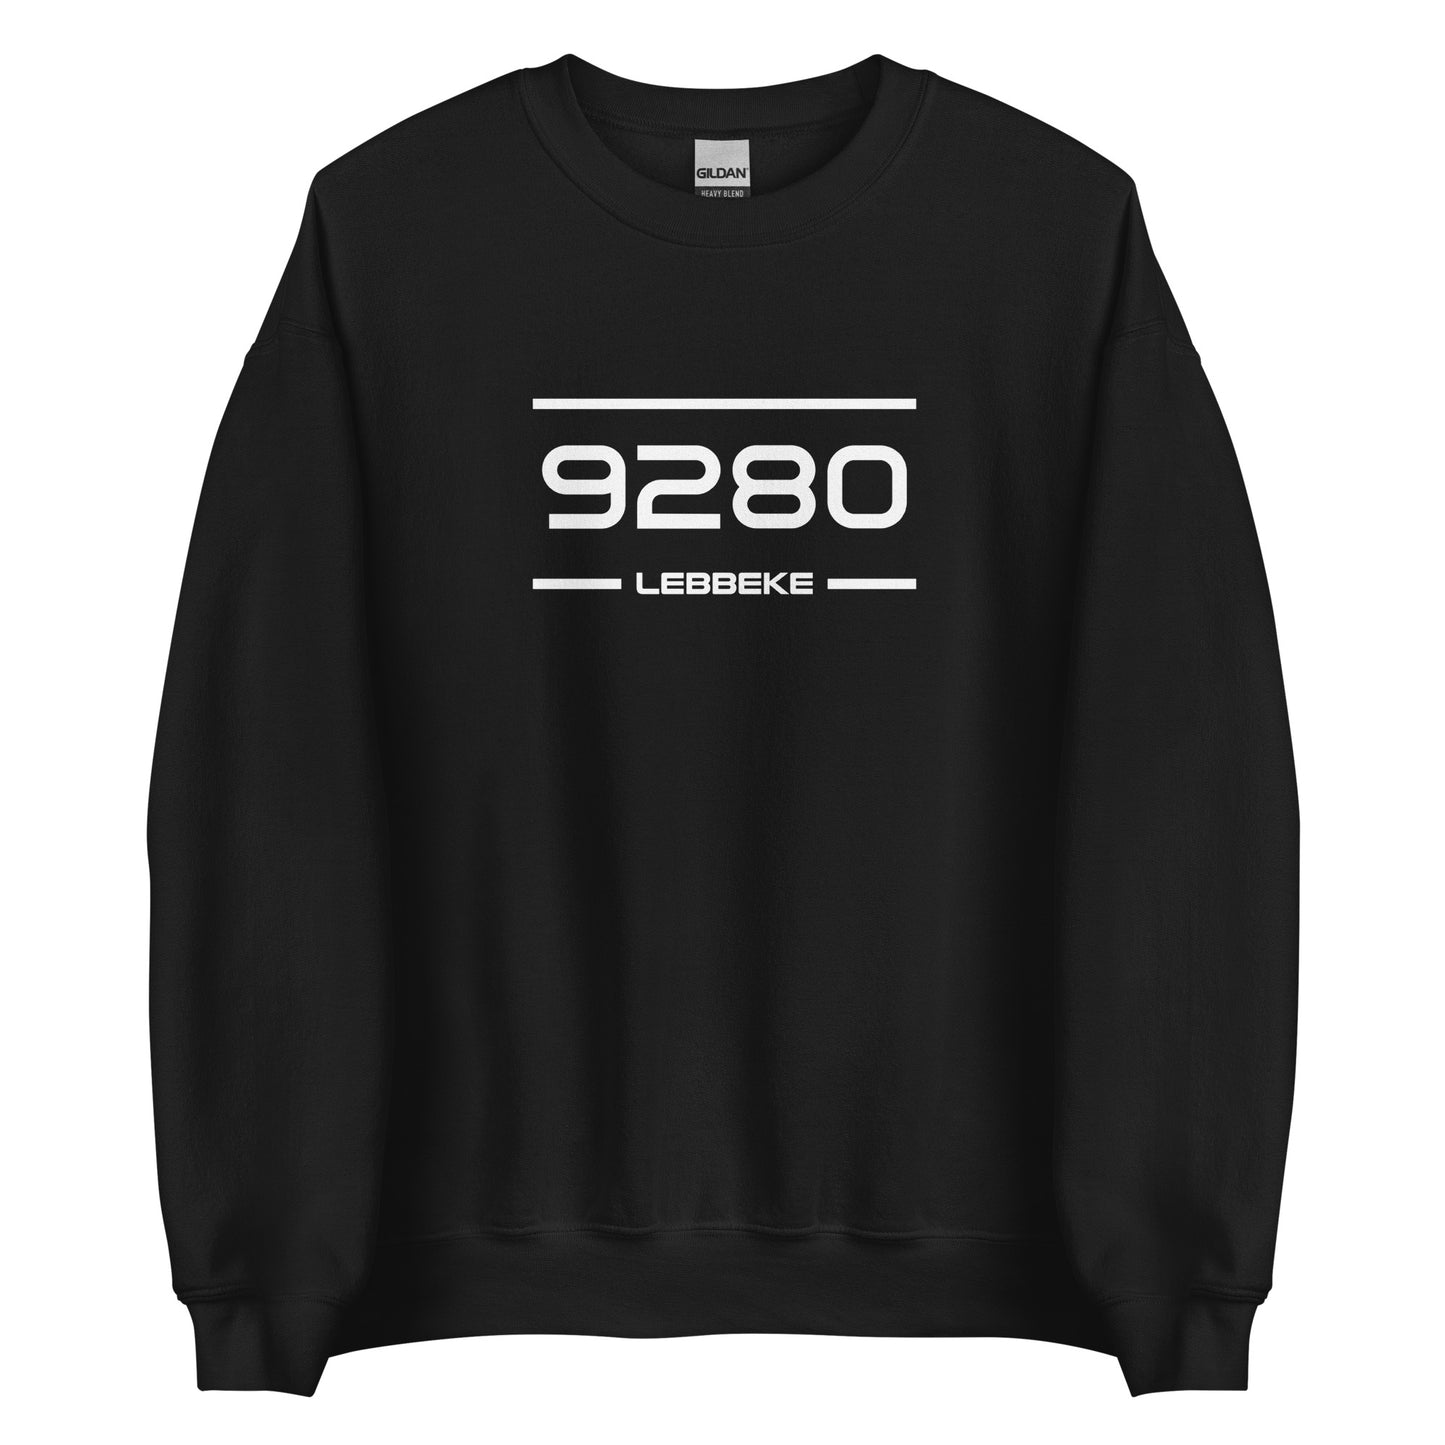 Sweater - 9280 - Lebbeke (M/V)